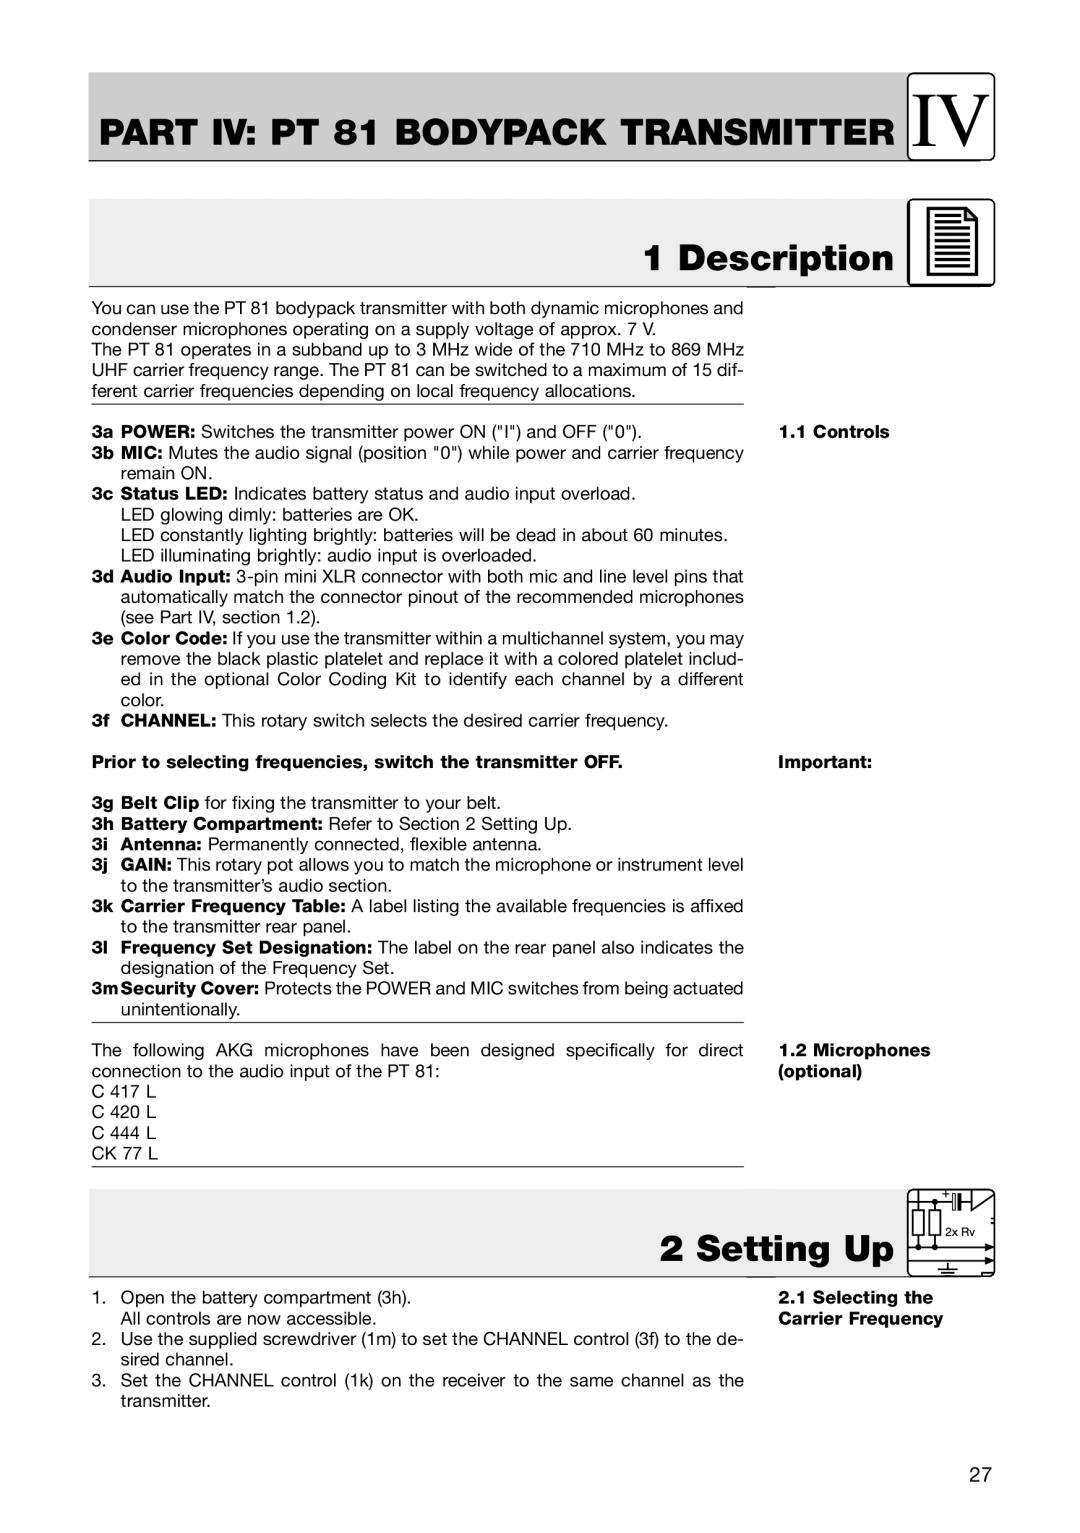 AKG Acoustics PR 81, HT 81 manual PART IV PT 81 BODYPACK TRANSMITTER 1 Description, Setting Up 